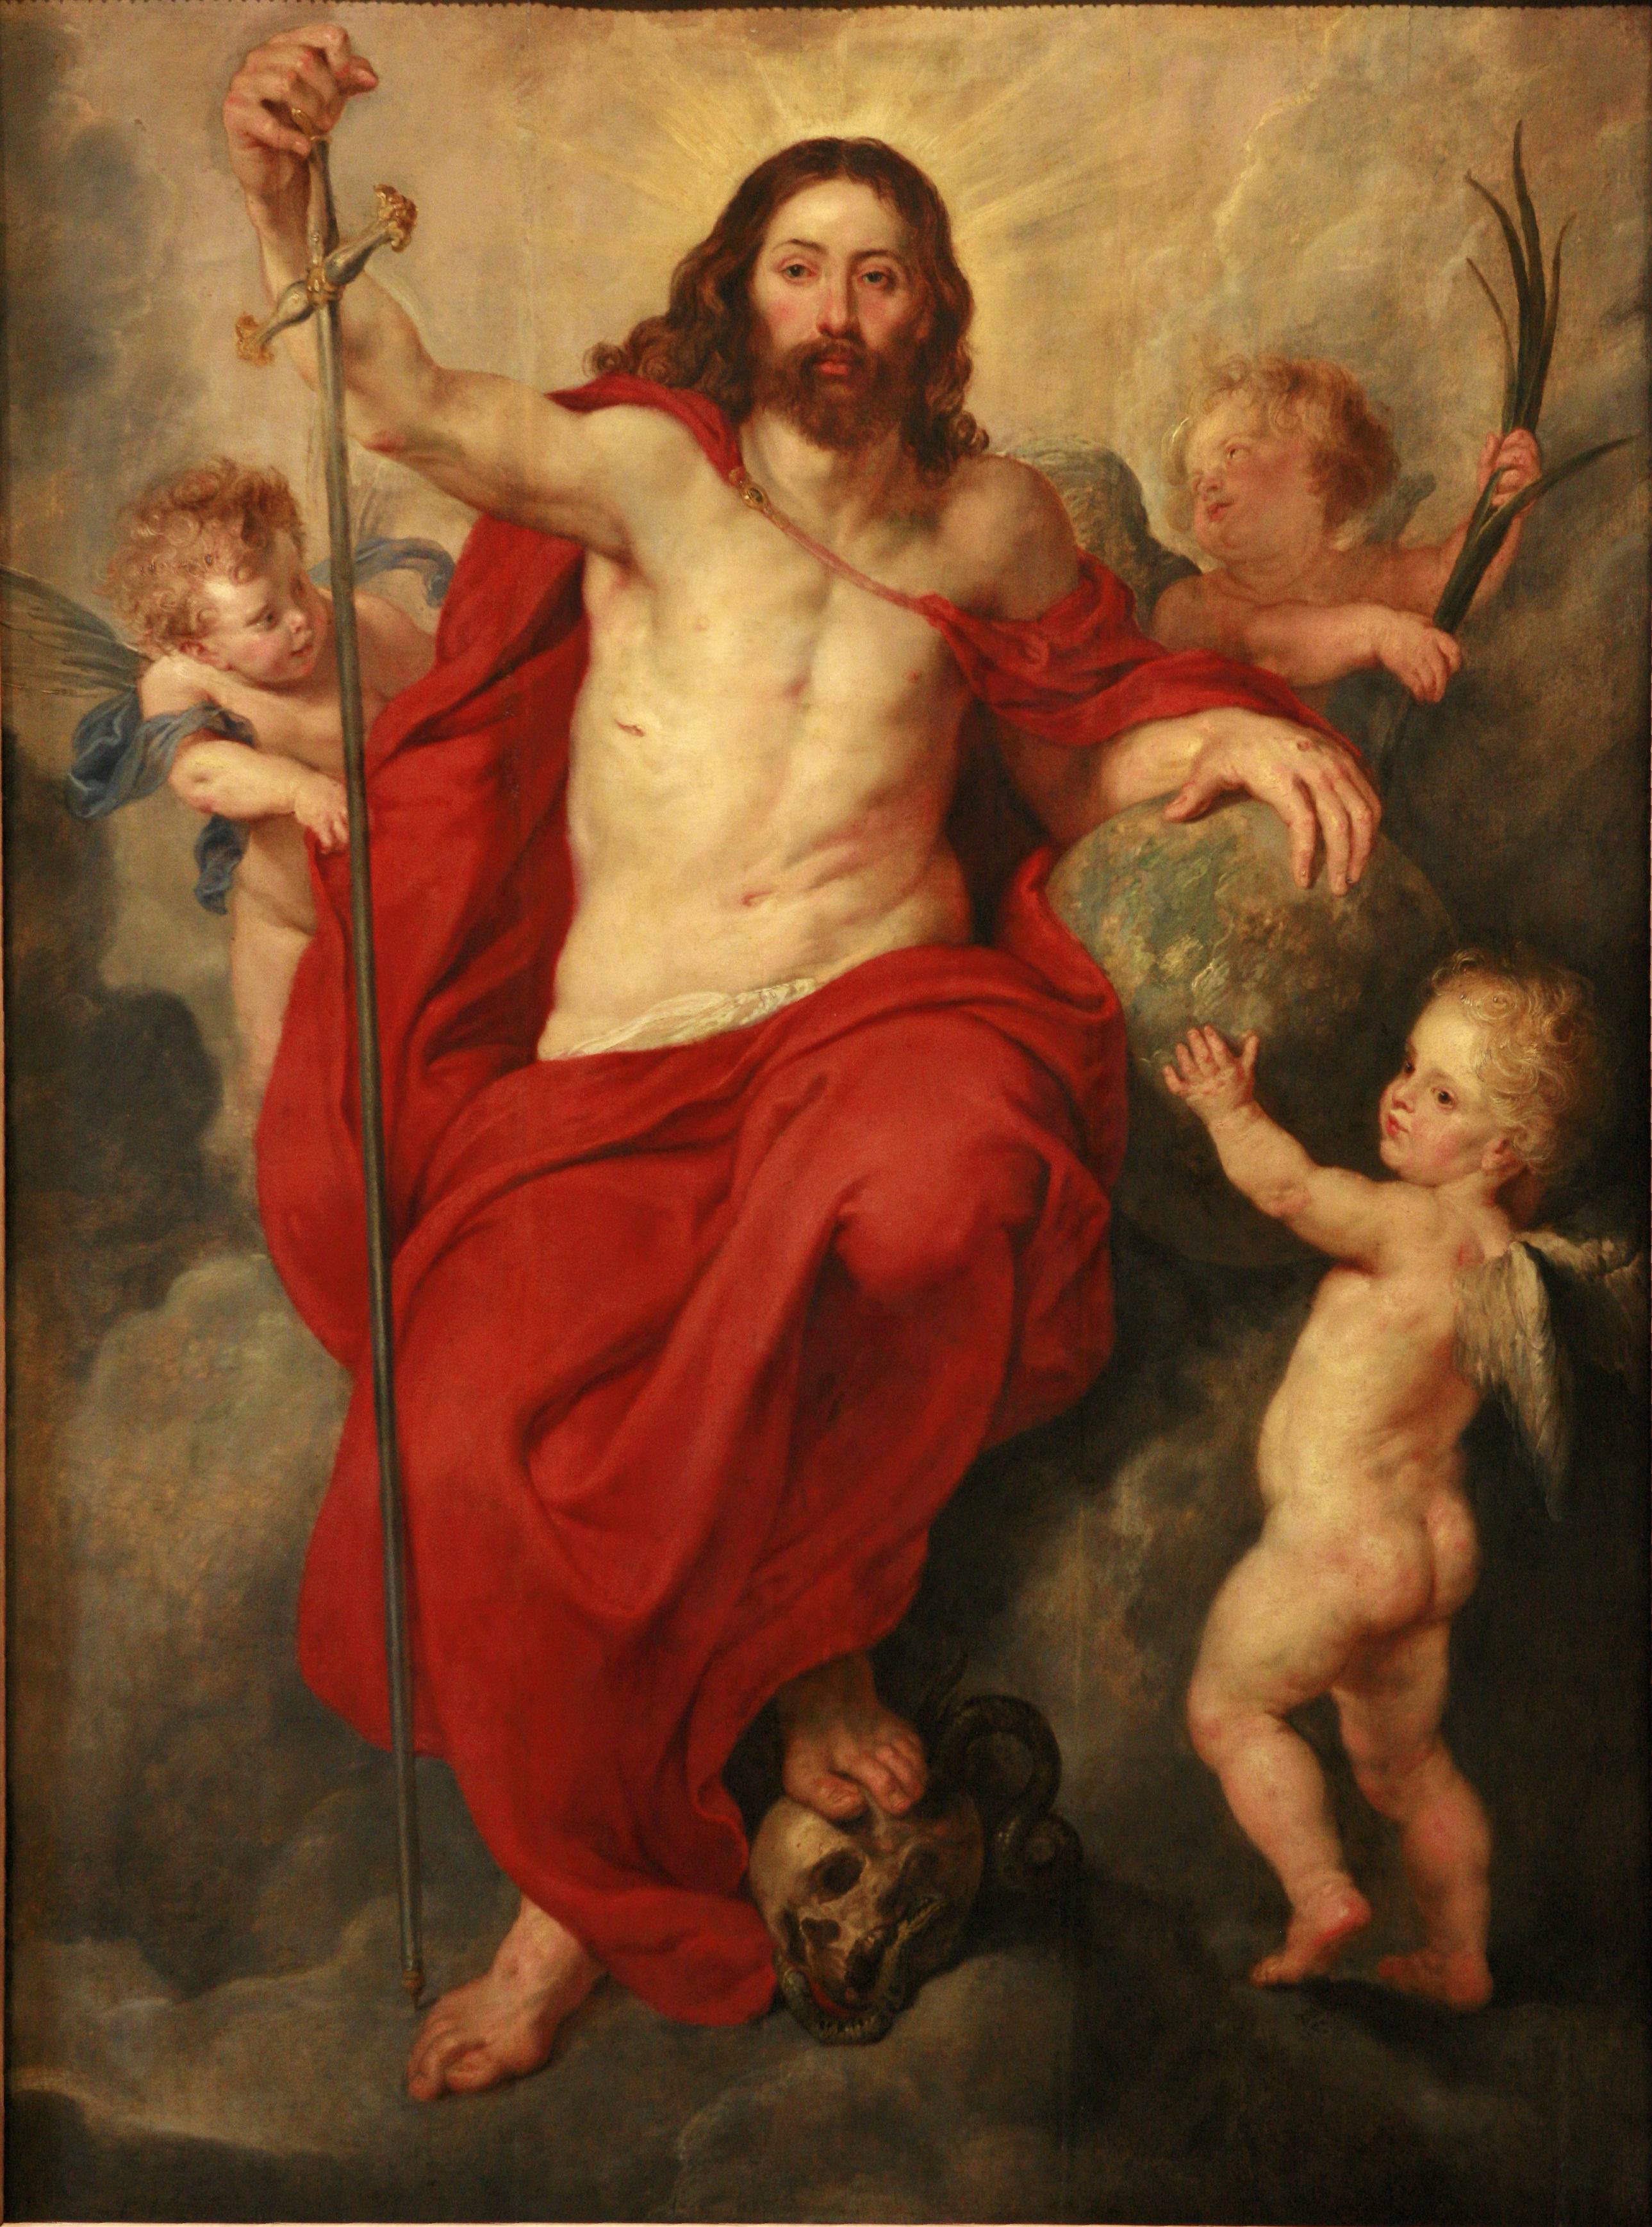 Peter Paul Rubens (1615-1616)